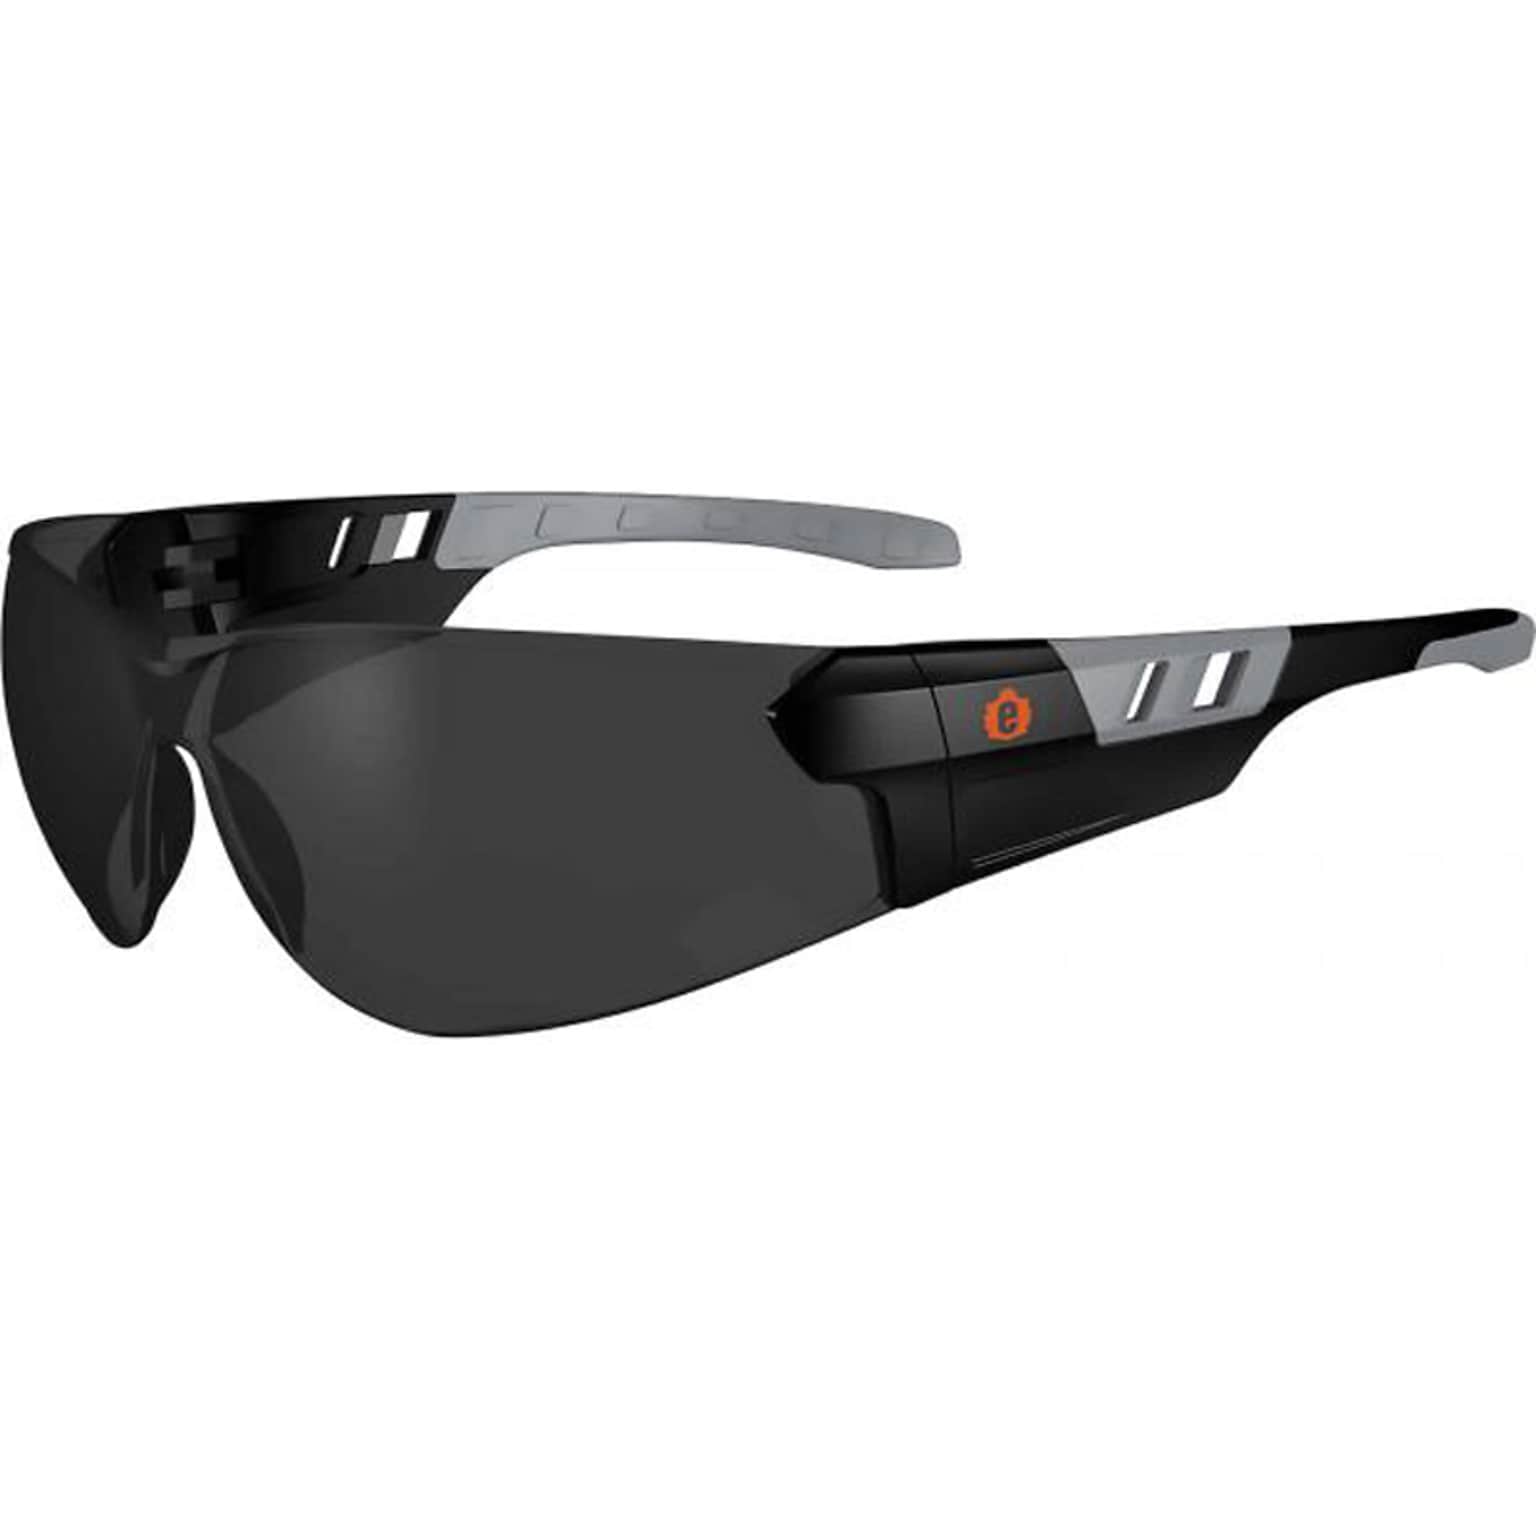 Ergodyne Skullerz SAGA Safety Glasses, Frameless, Smoke Lens (59130)